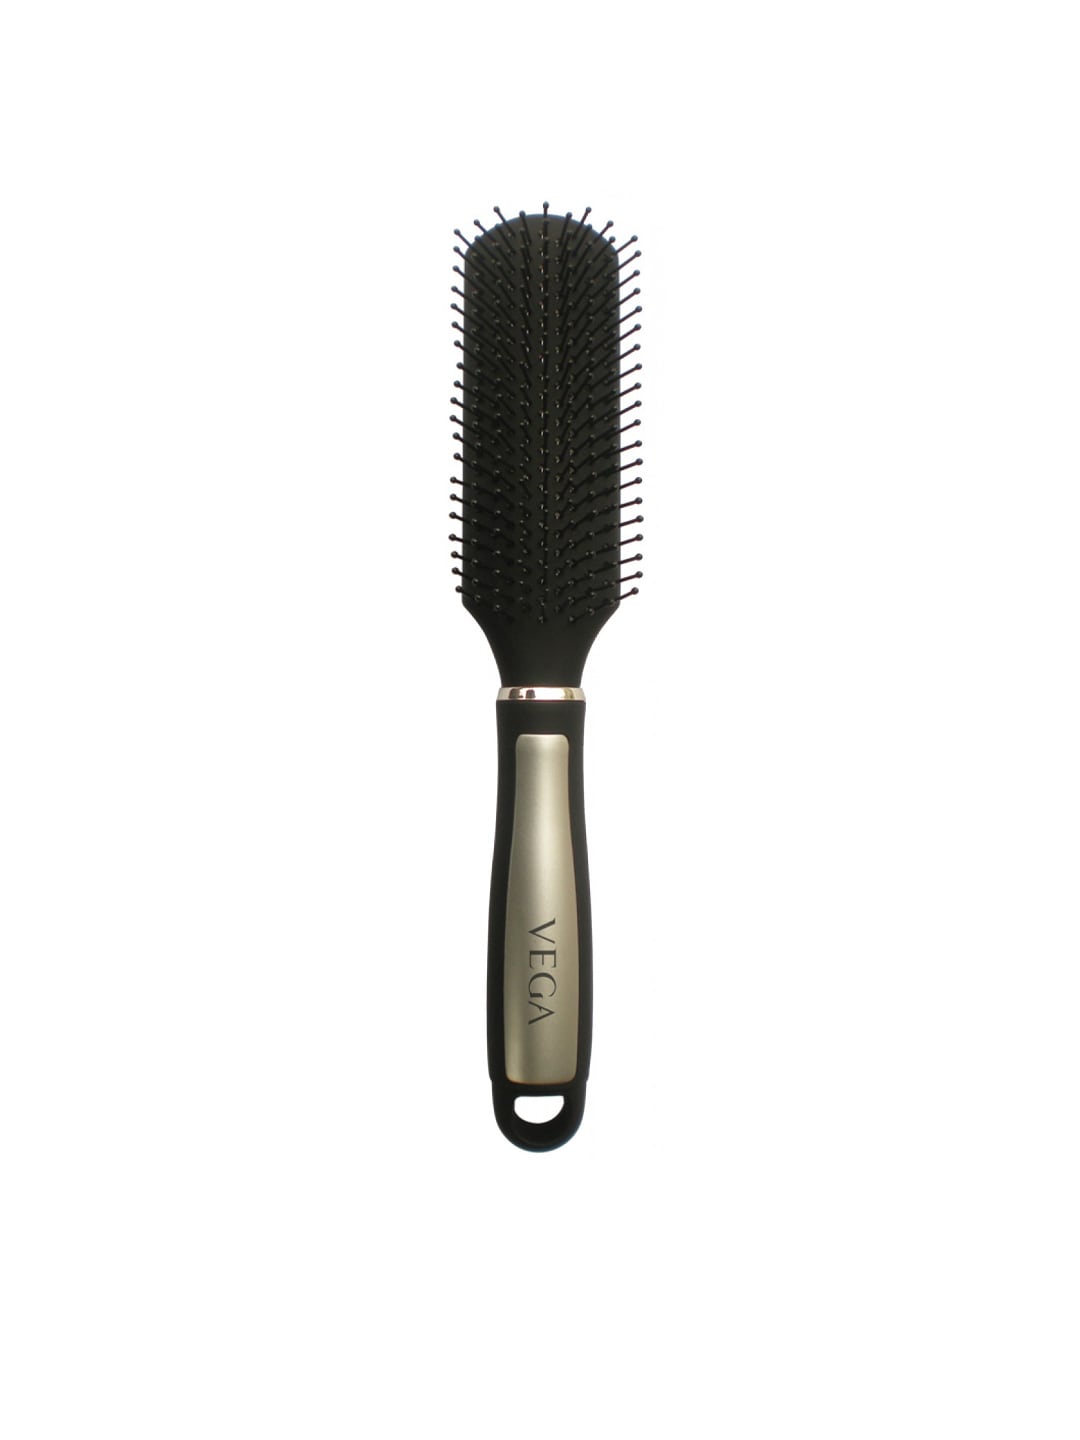 VEGA Unisex Black Flat Paddle Hair Brush Price in India